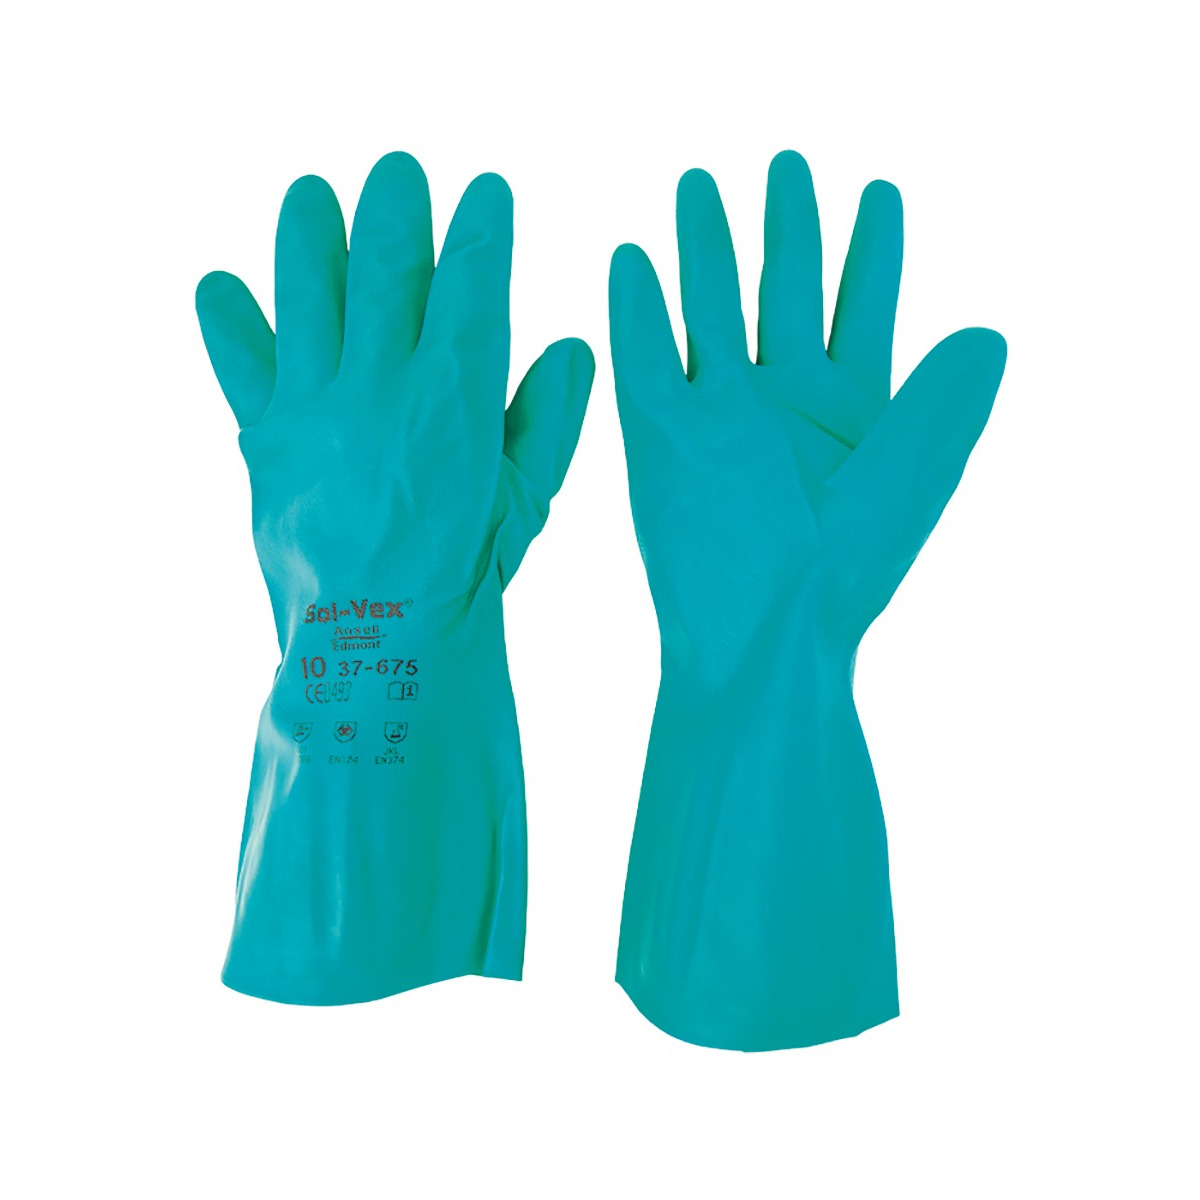 Handschuh Sol-Vex 37-675 Gr 11-12 Paar Ansell 